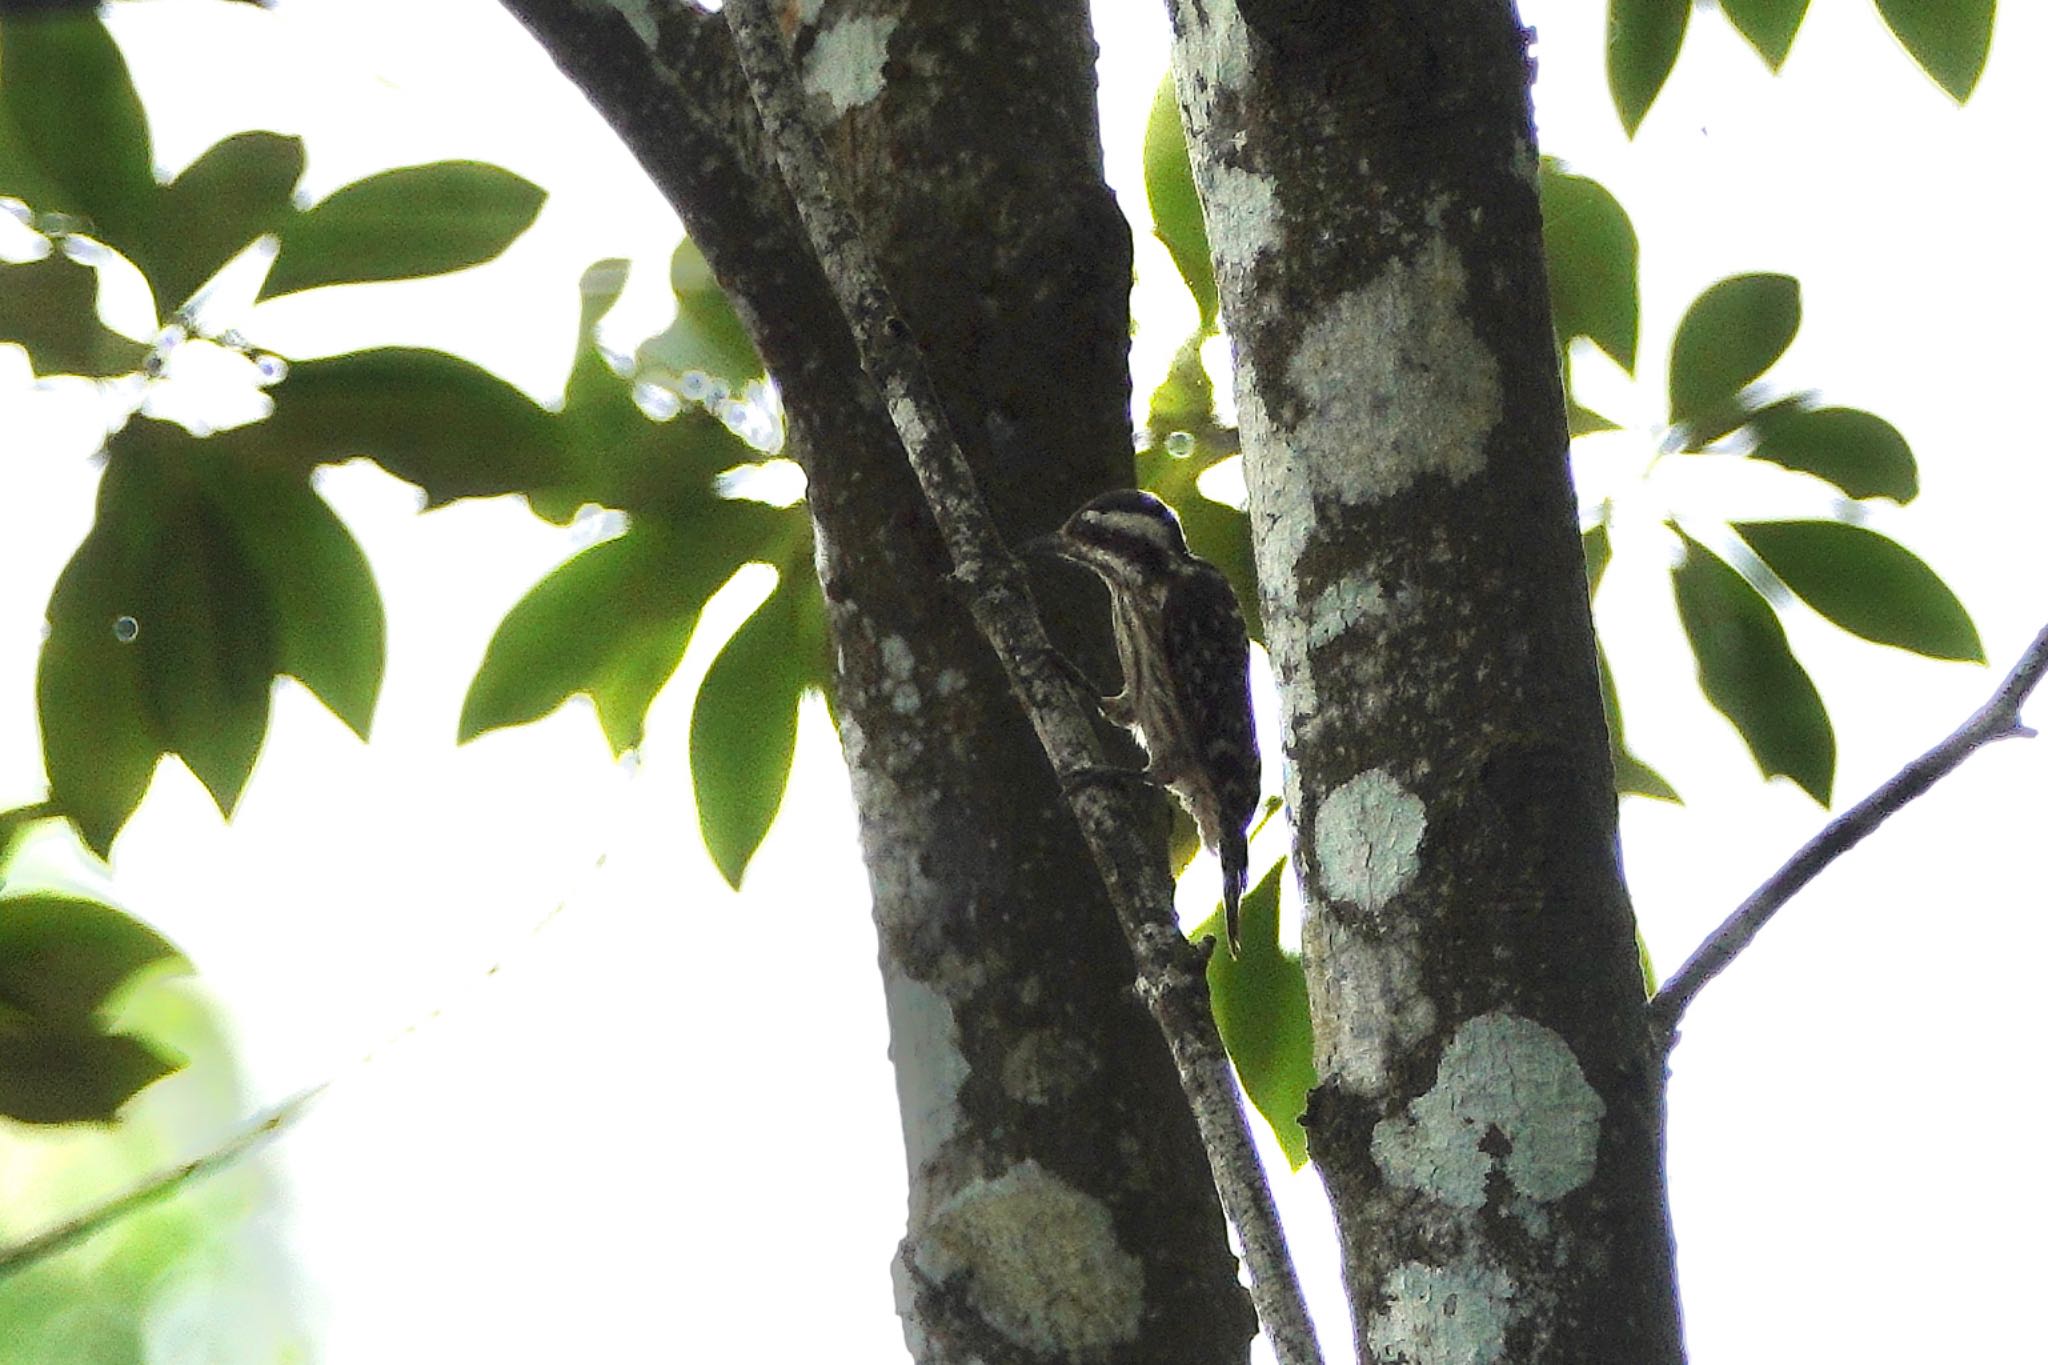 Photo of Sunda Pygmy Woodpecker at Taman Alam Kuala Selangor by のどか